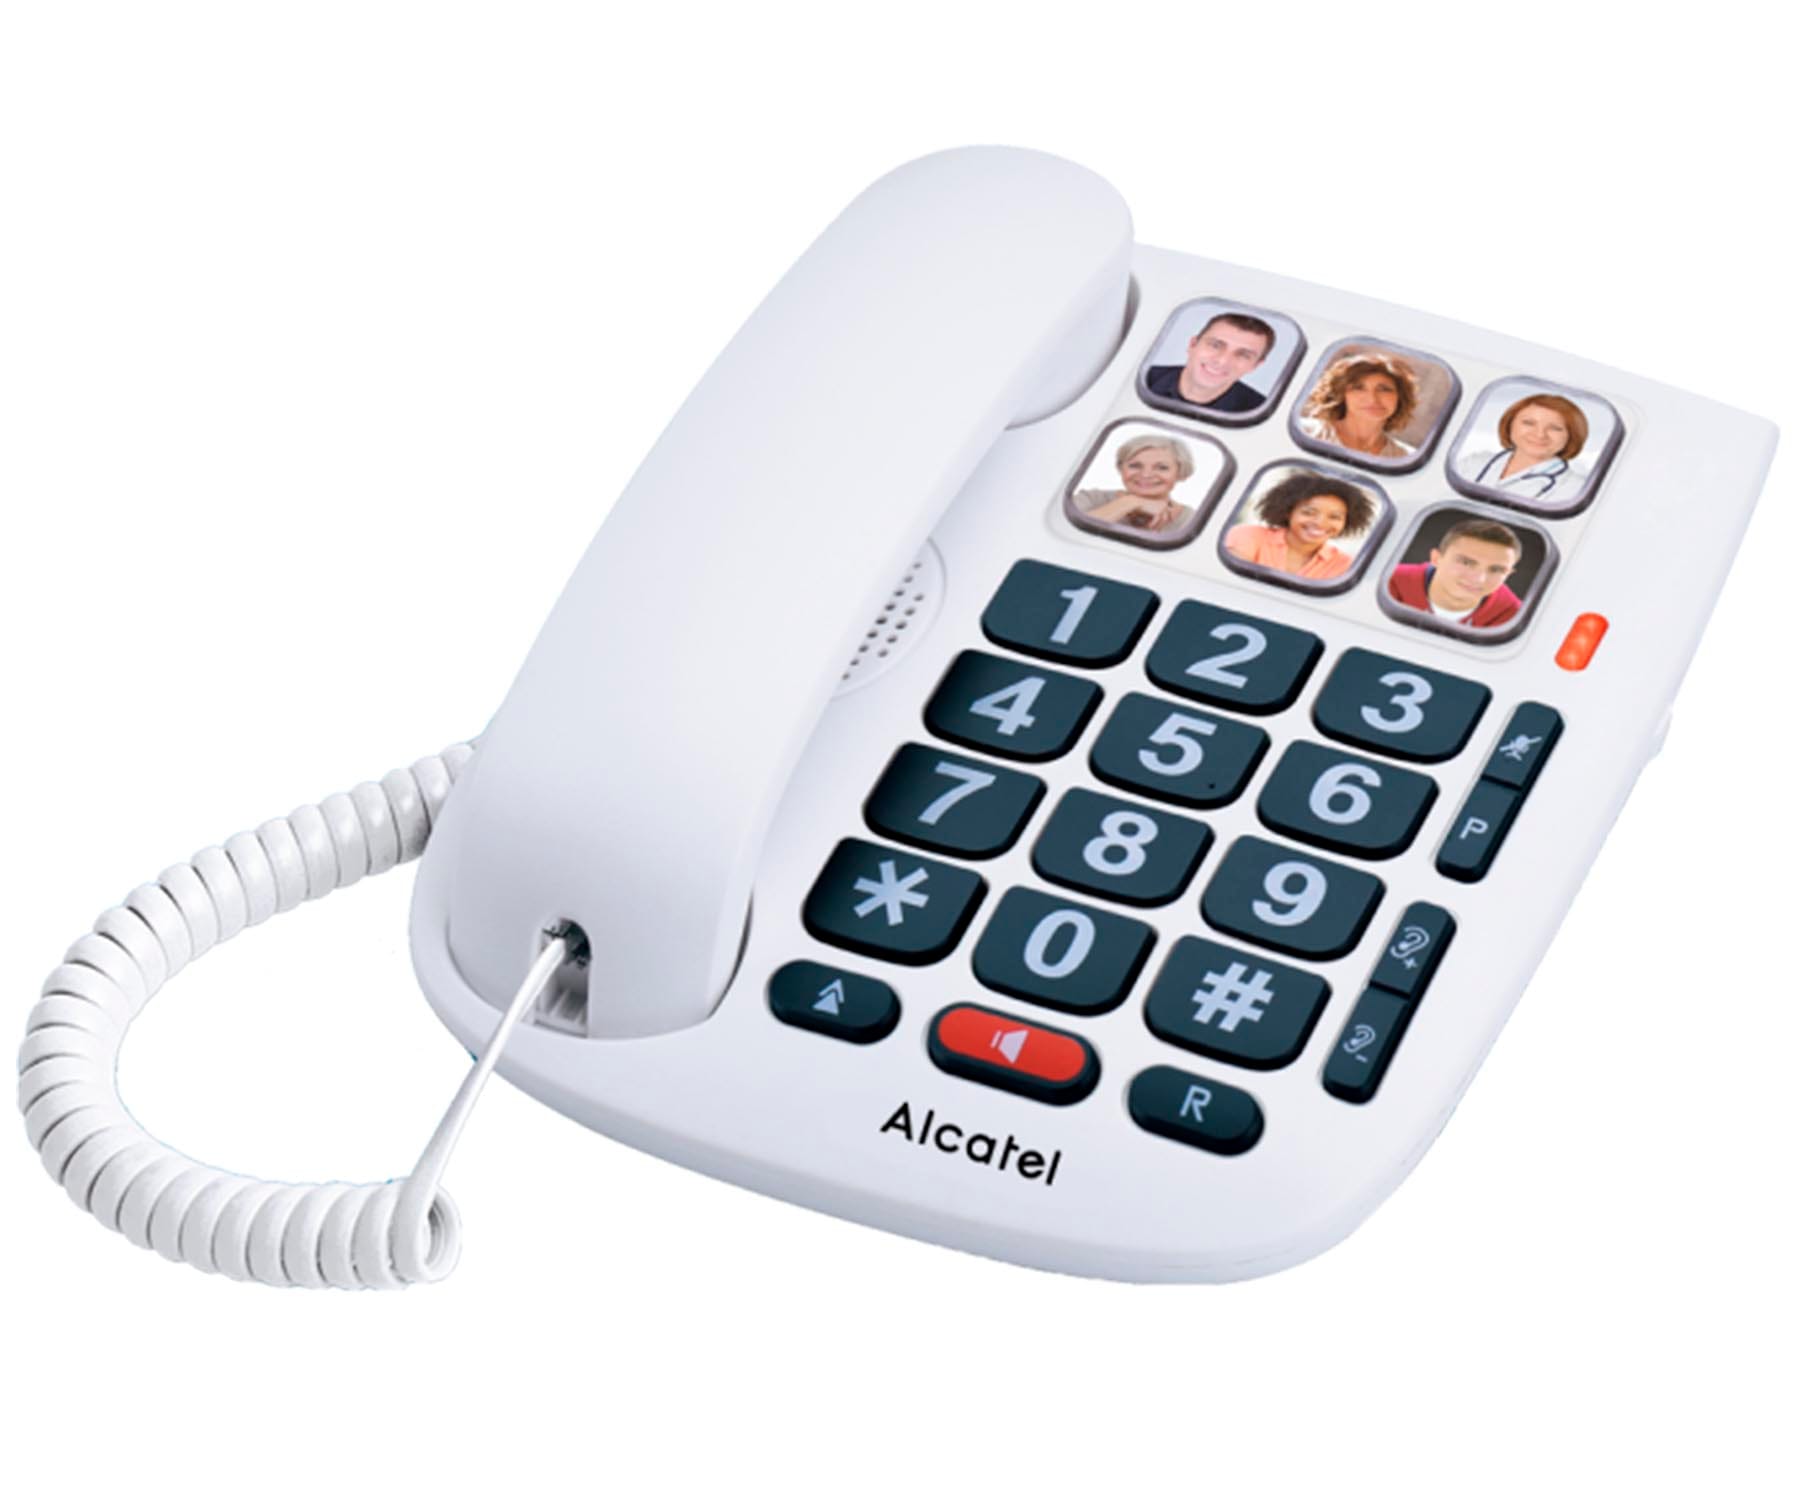 Alcatel TMAX10 Blanco / Teléfono fijo